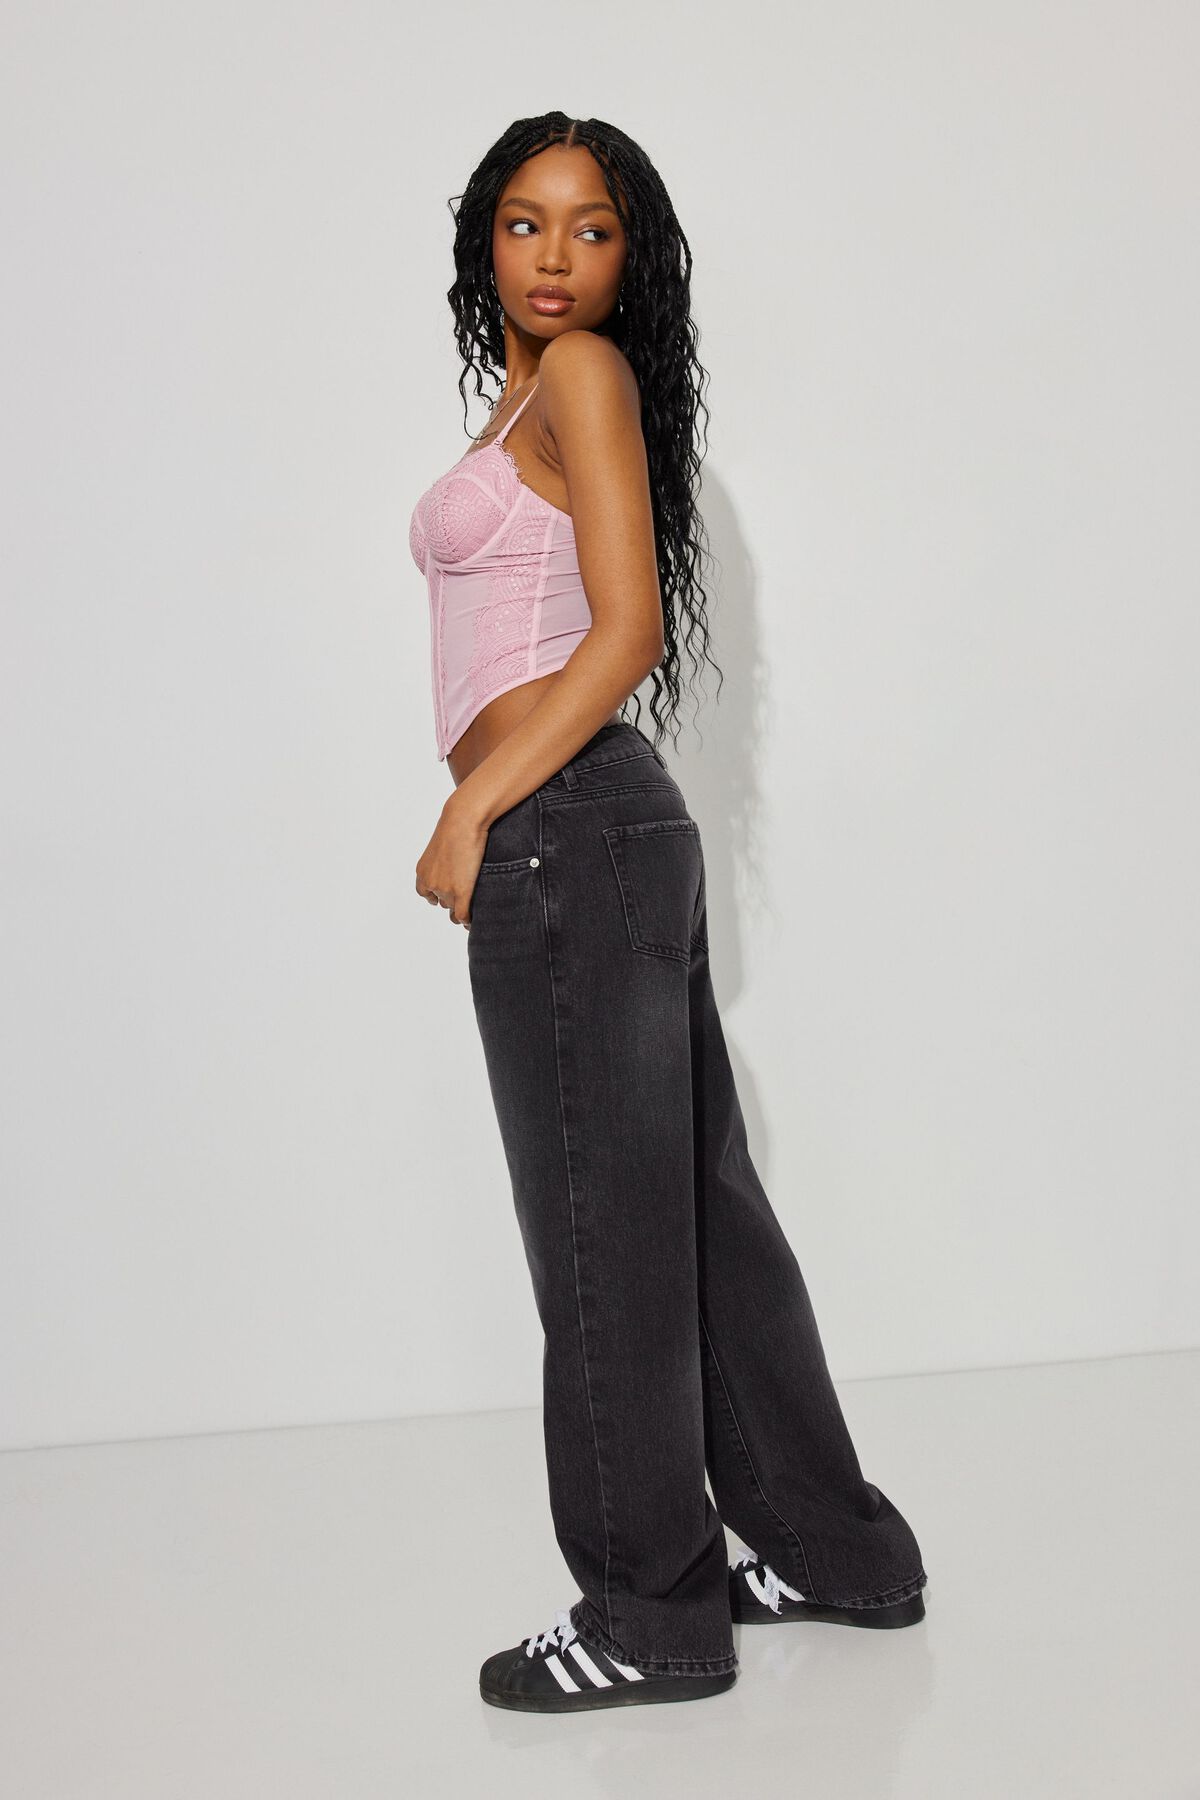 Shop Women's Sia Black Slouchy Jeans –